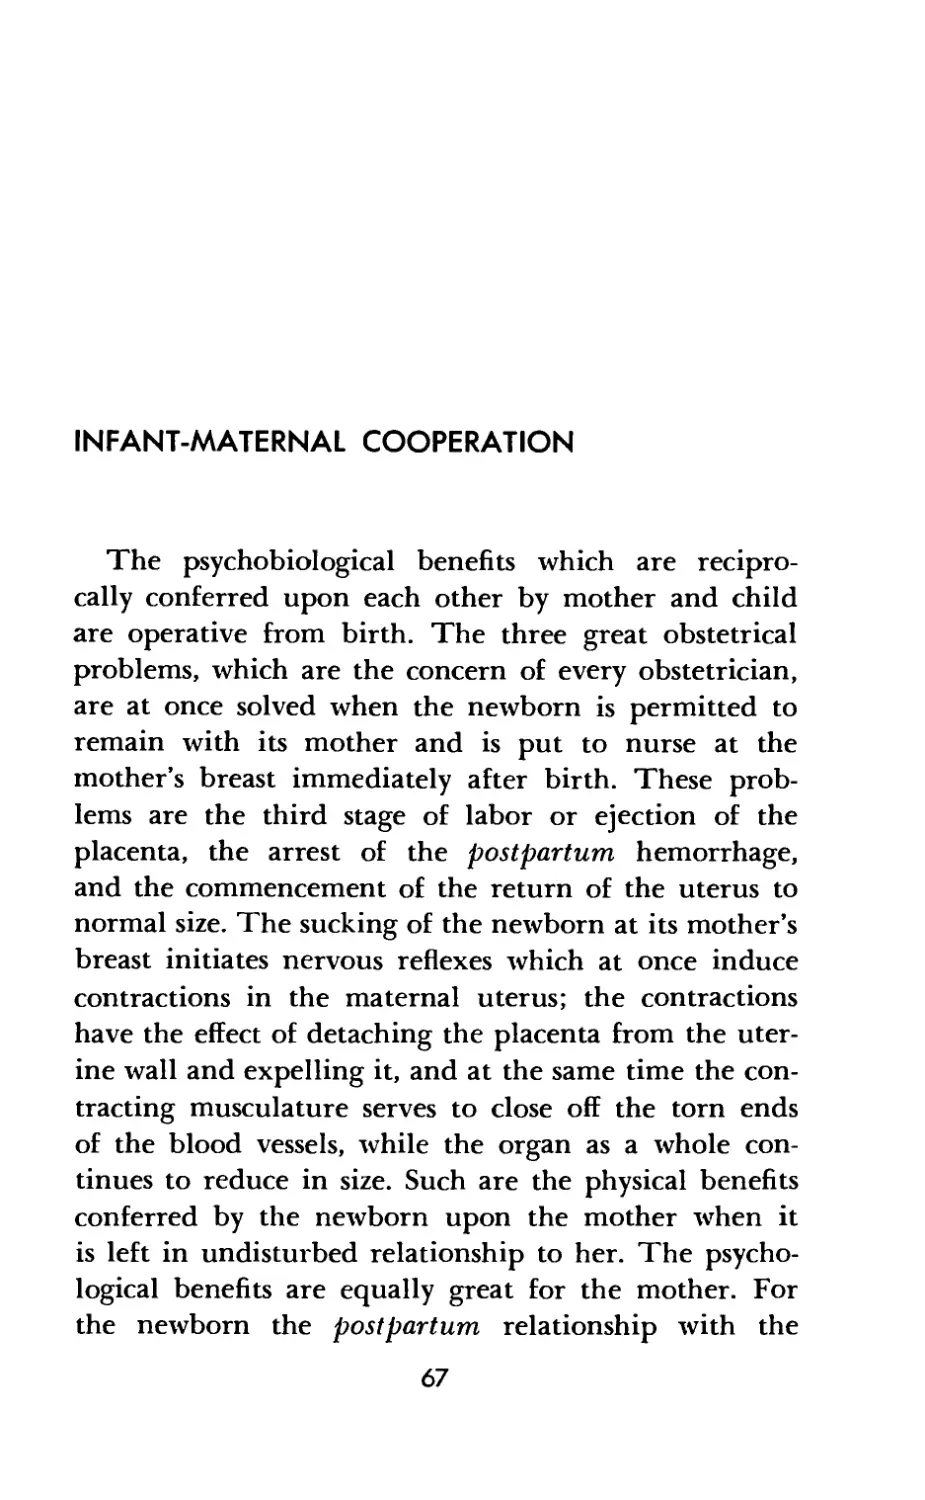 Infant-Maternal Cooperation